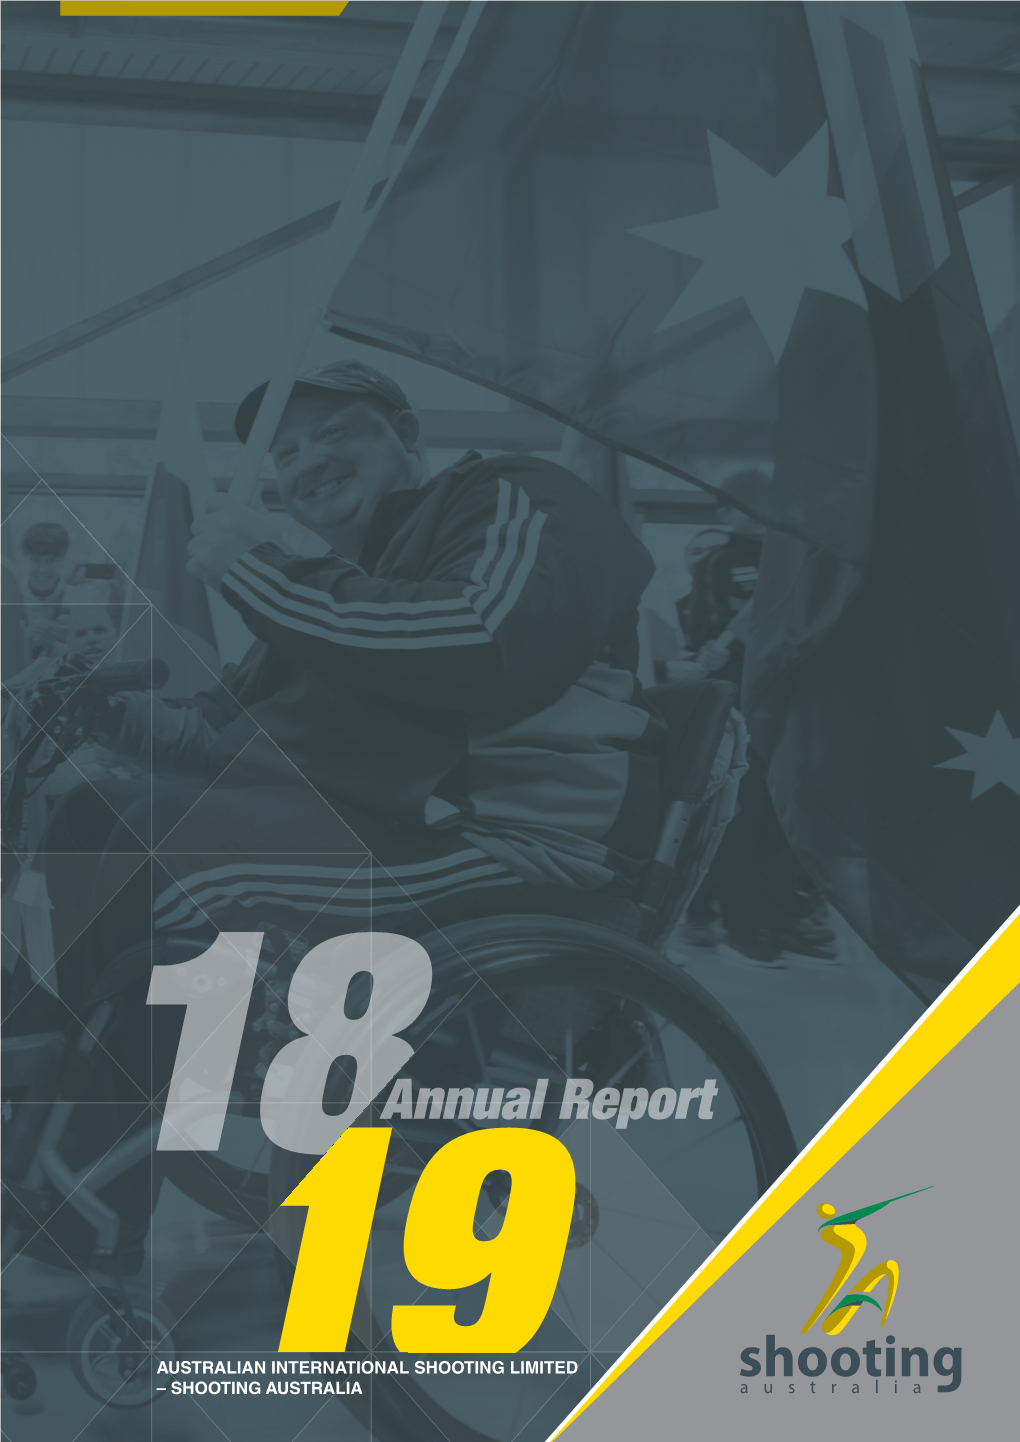 Shooting Australia Annual Report 2018-19